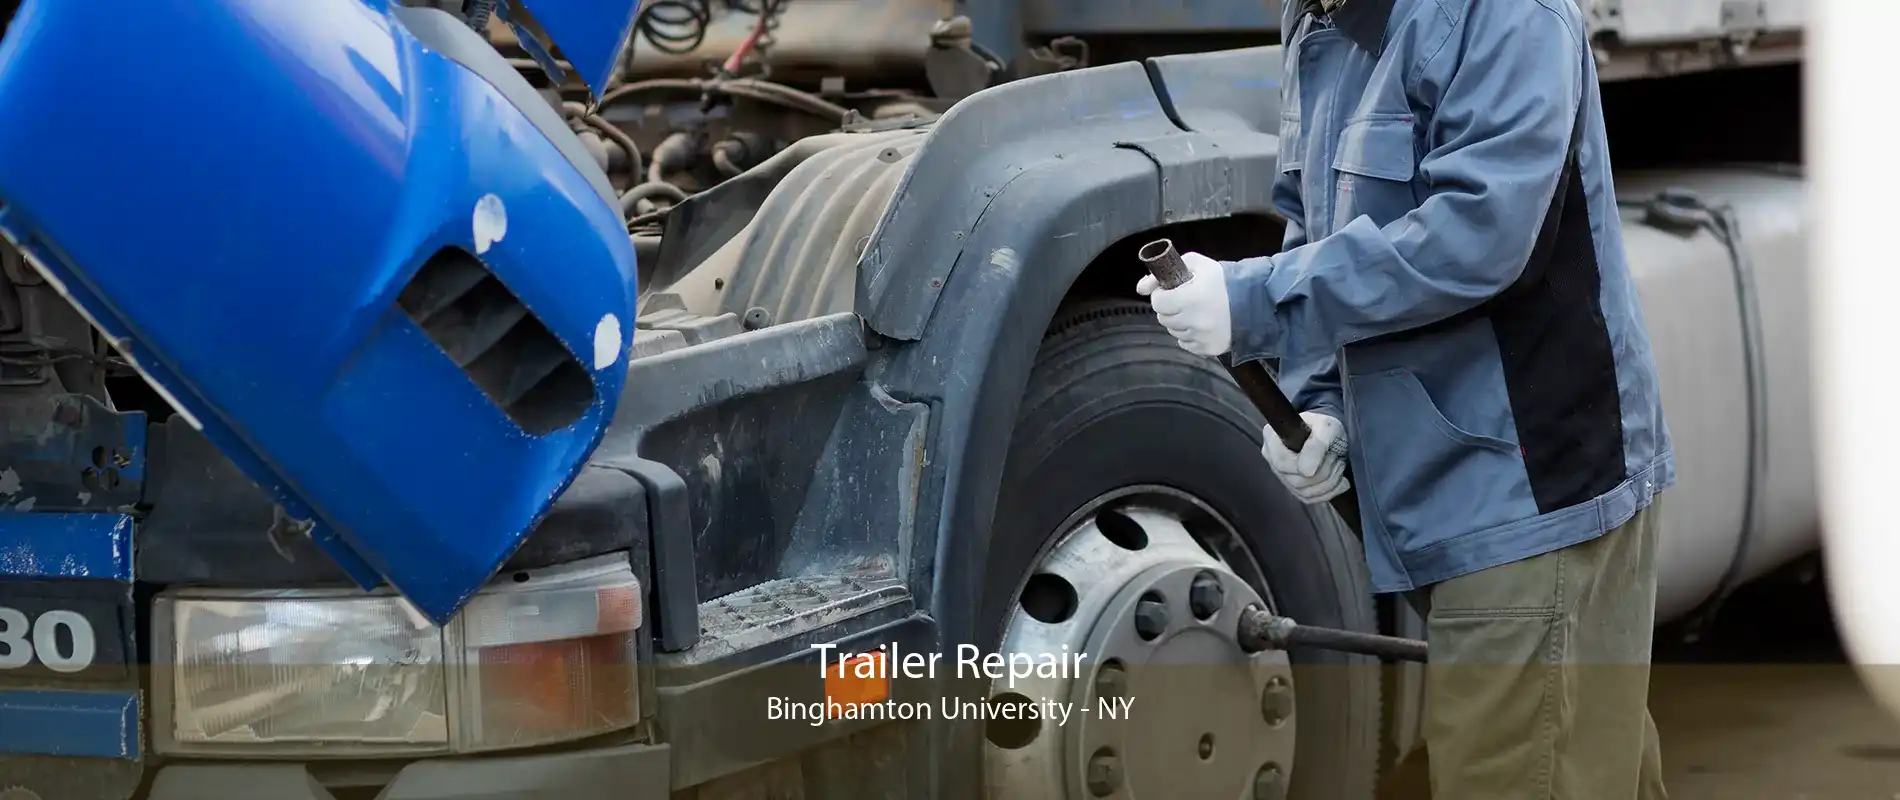 Trailer Repair Binghamton University - NY